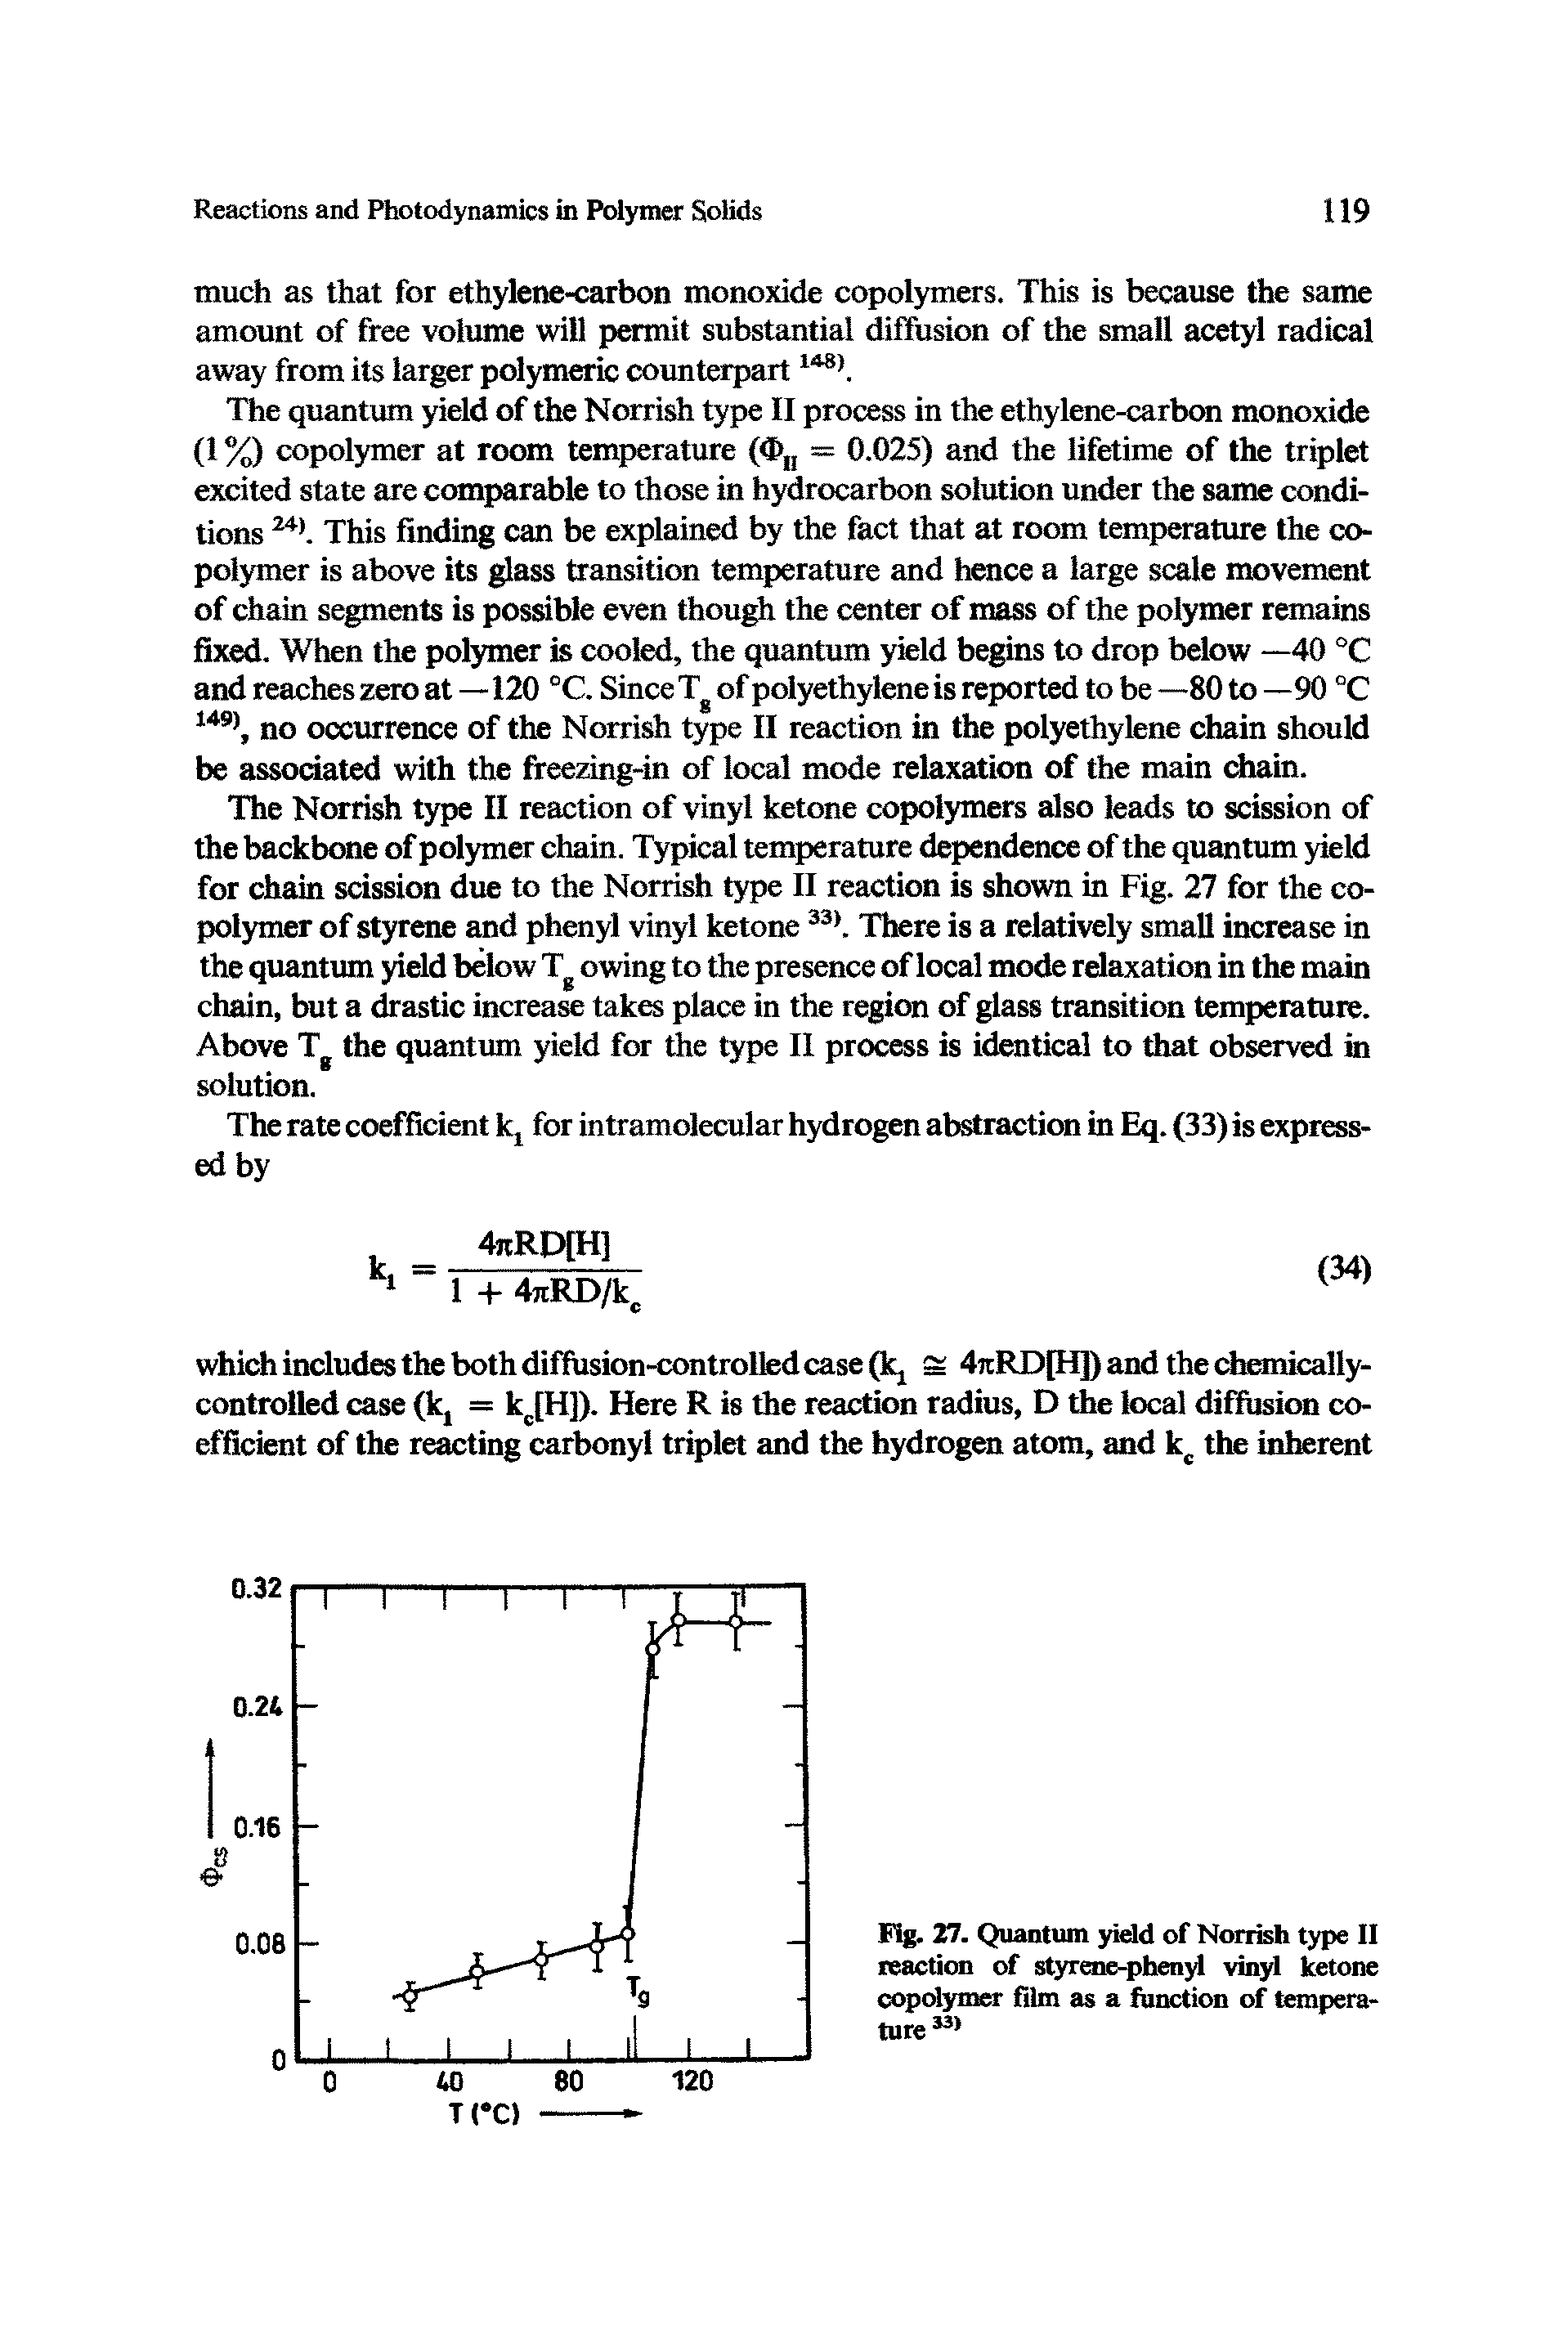 Fig. 27. Quantum yield of Norrish type II reaction of styren phenyl vinyl ketone copolynKr film as a function of temperature ...